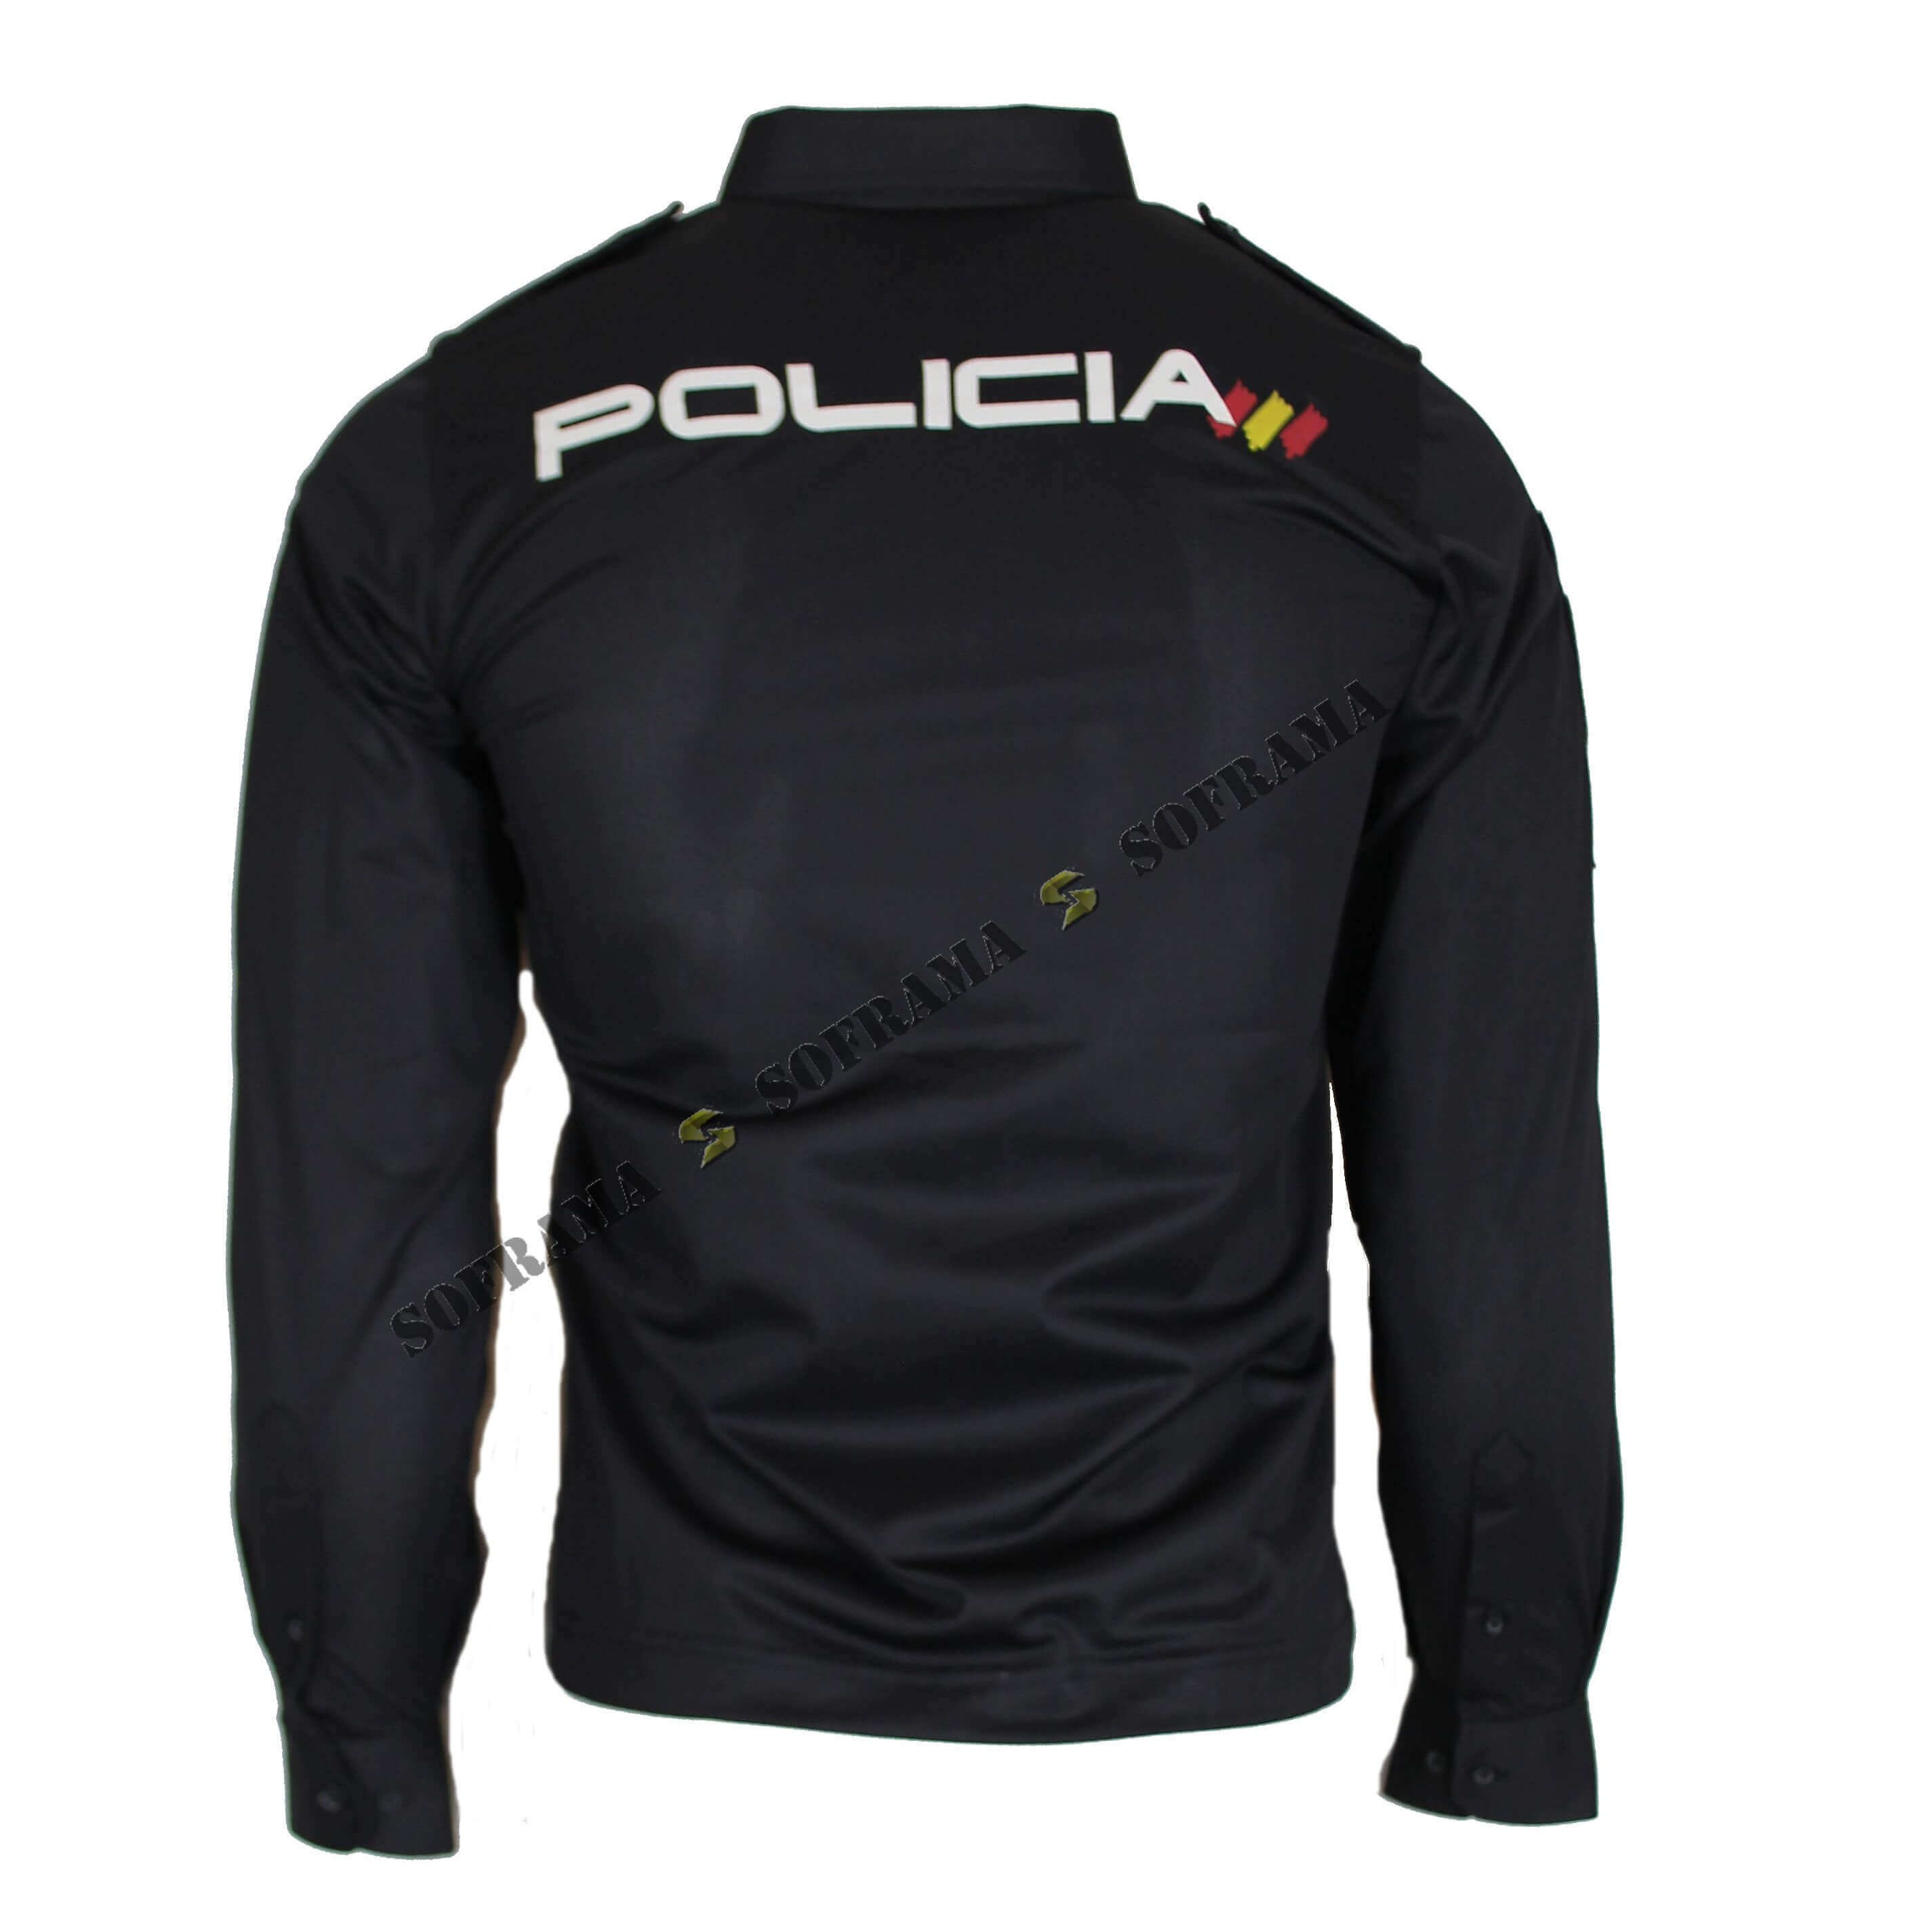 Spanish police polo shirt #2 - Soframa